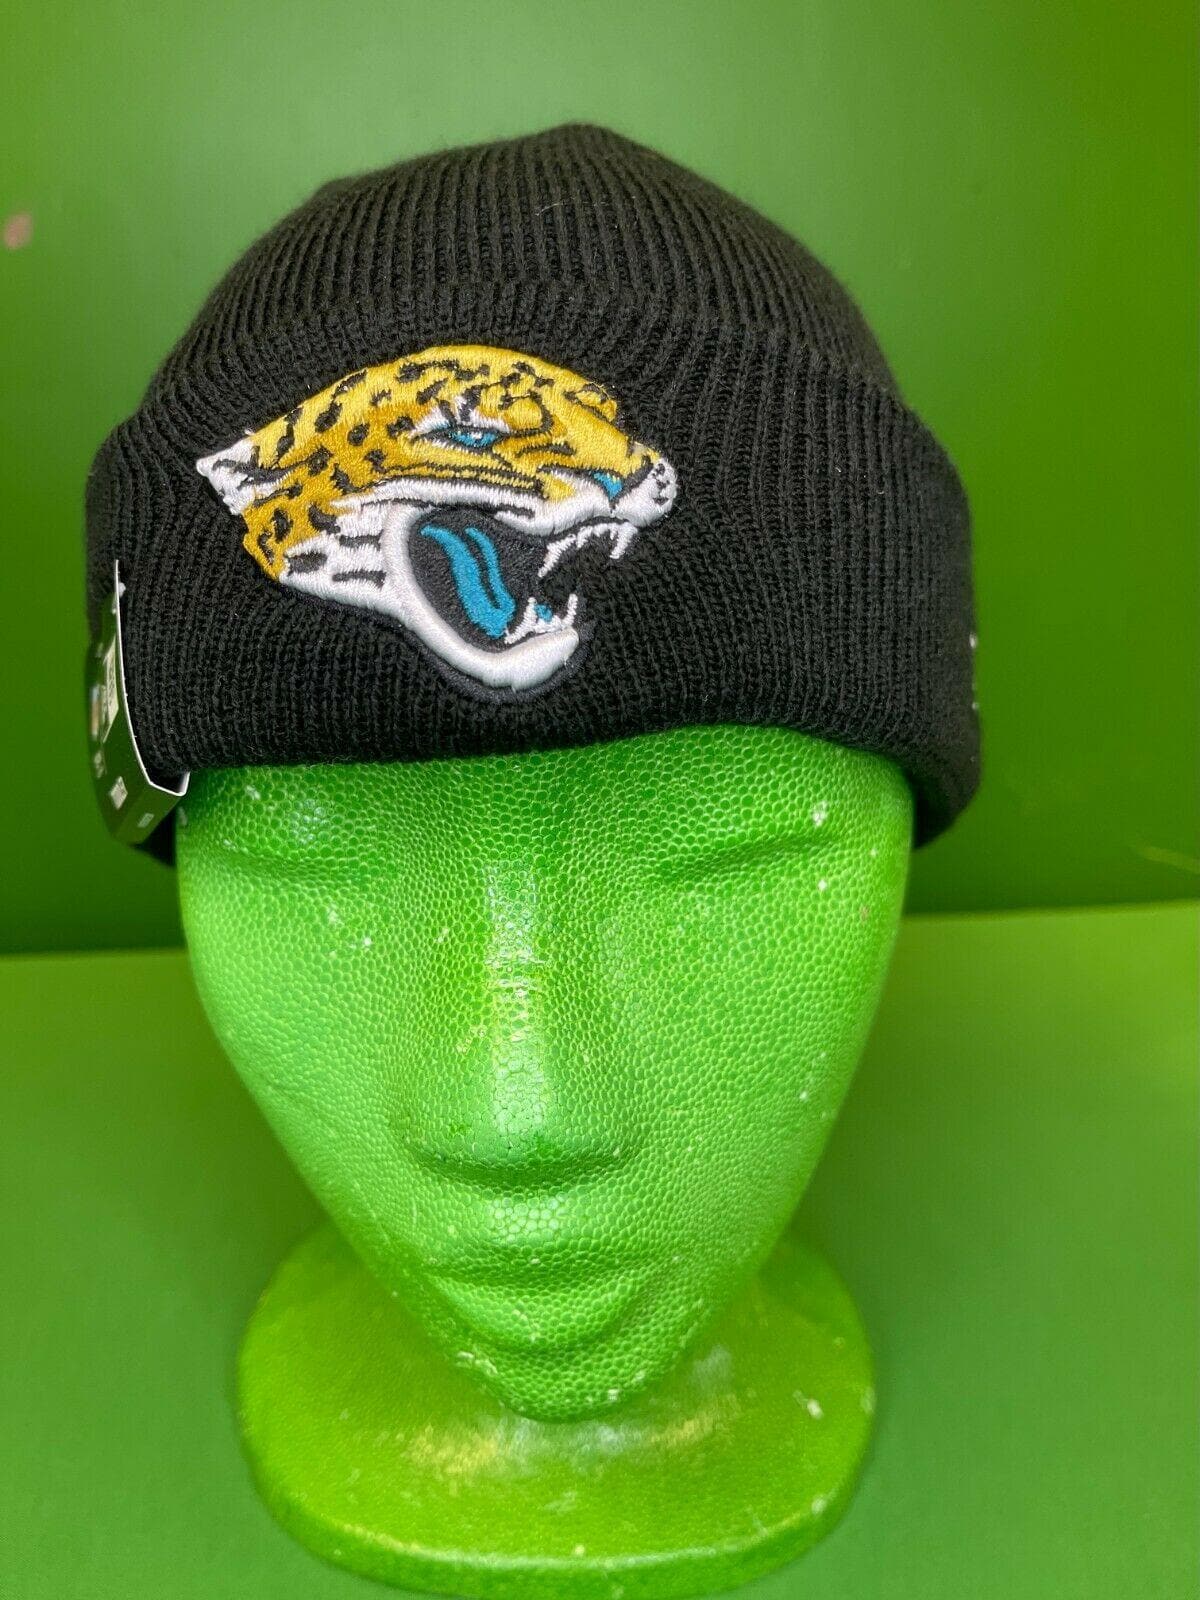 NFL Jacksonville Jaguars Warm Winter Hat Size Toddler by New Era